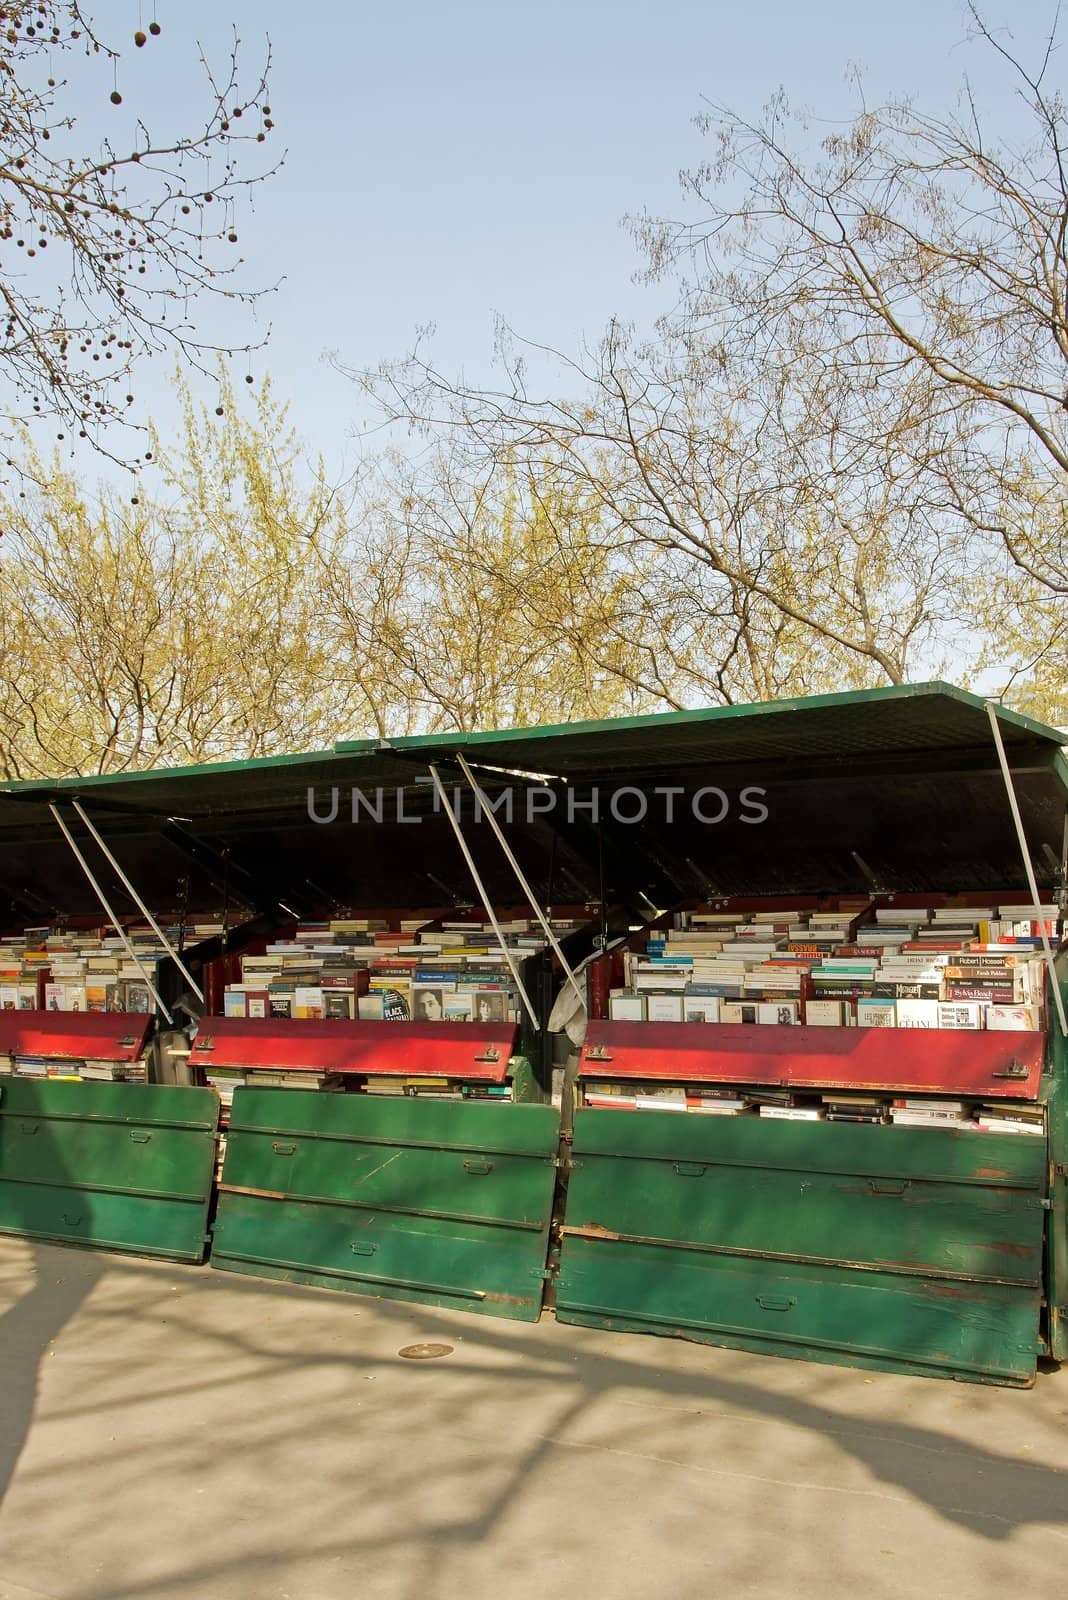 booksellers in Paris, Quai de Seine  France